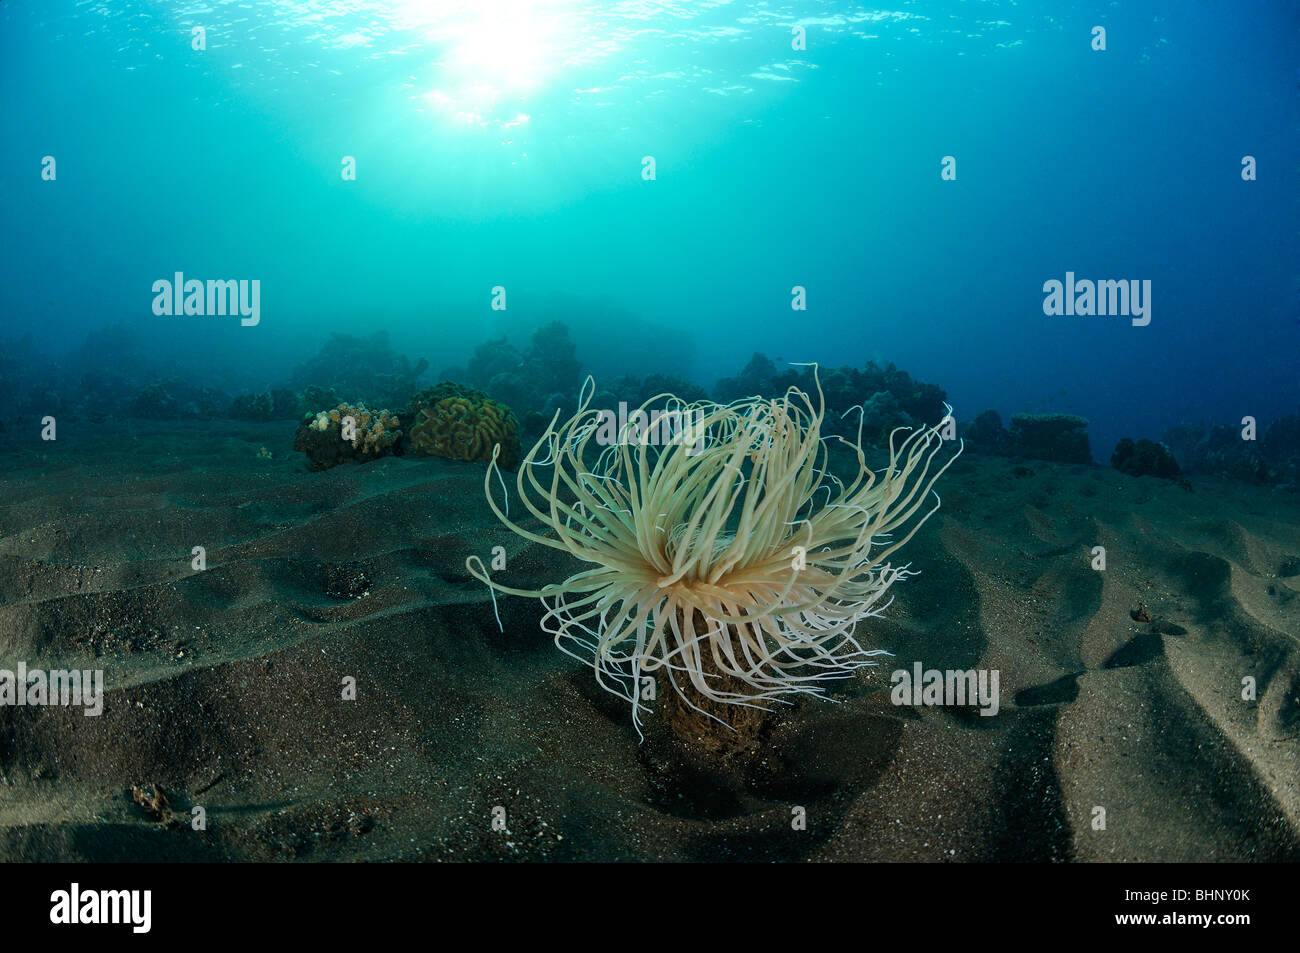 Cerianthus SP, Tube Anemone am Meeresboden, Alam Anda, Hausriff, Bali, Indonesien, Indo-Pazifik. Stockfoto